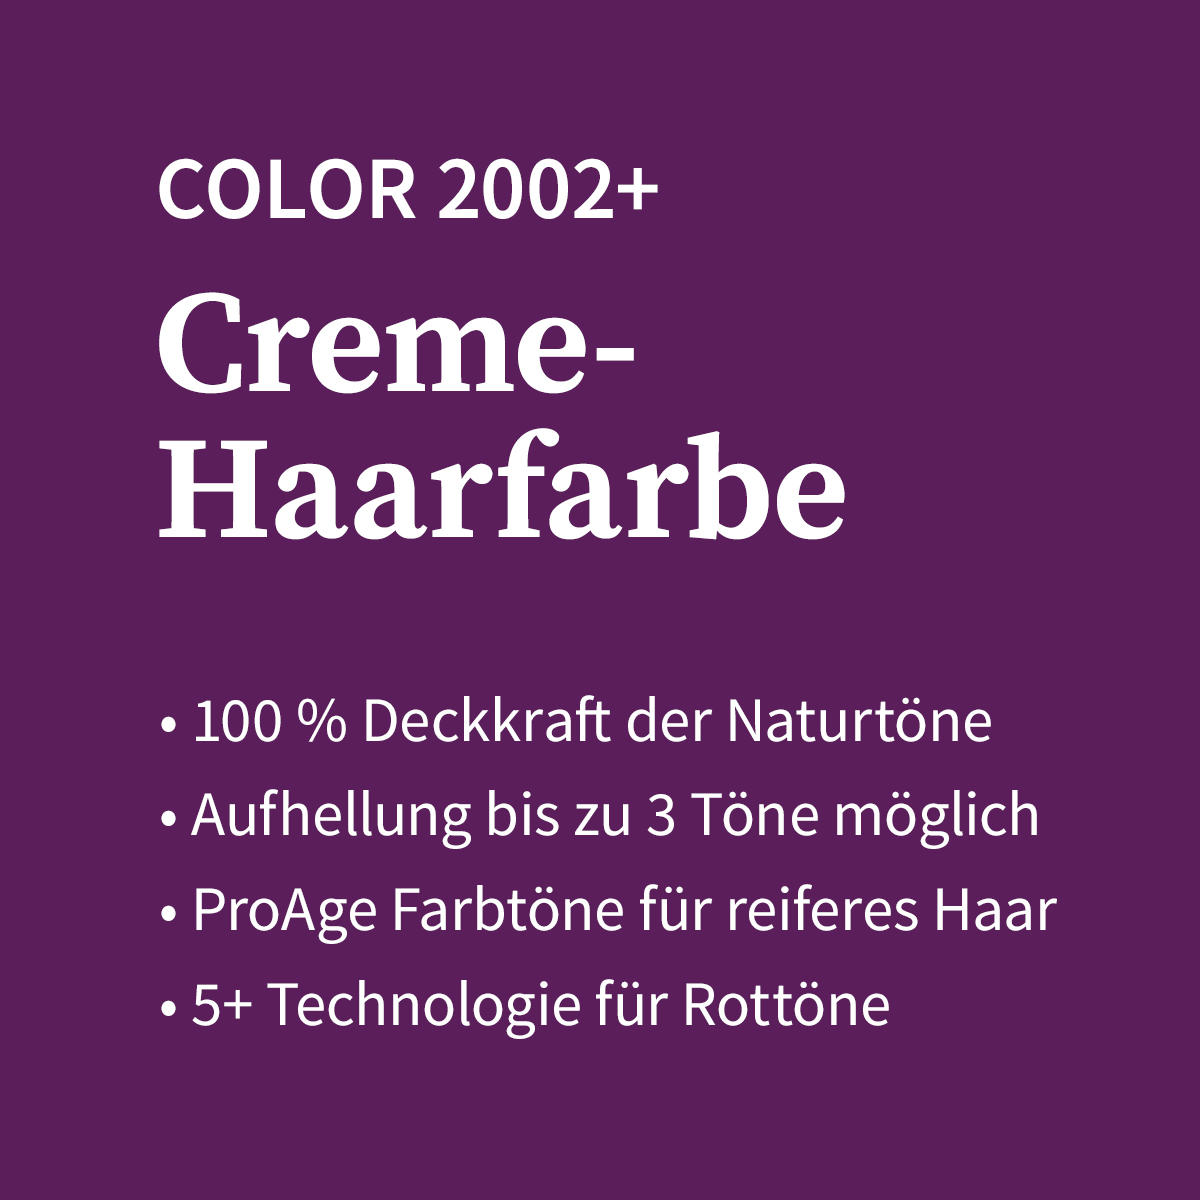 Basler Color 2002+ Cremehaarfarbe 4/66 mittelbraun violett intensiv, Tube 60 ml - 4